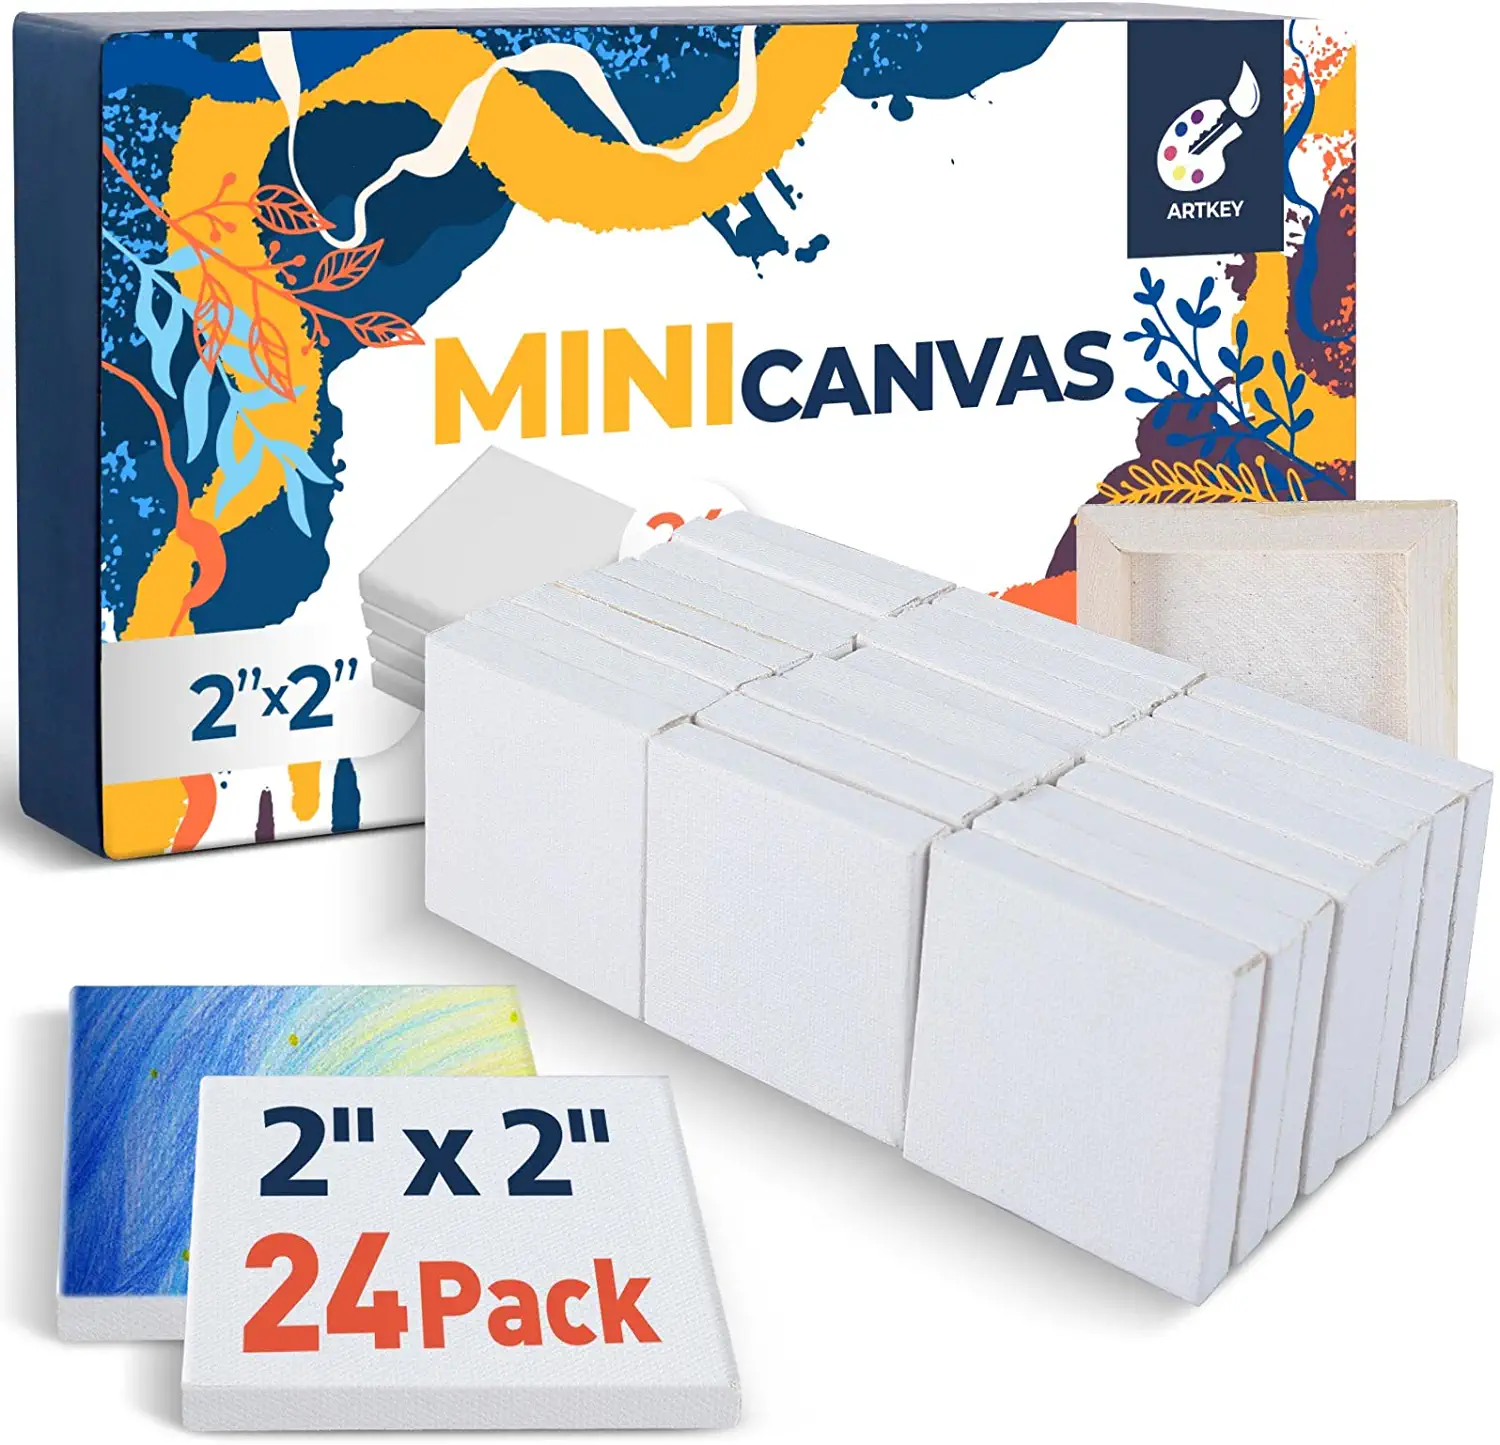 Artkey Triple Primed Non-Toxic Mini Canvas, 24-Pack